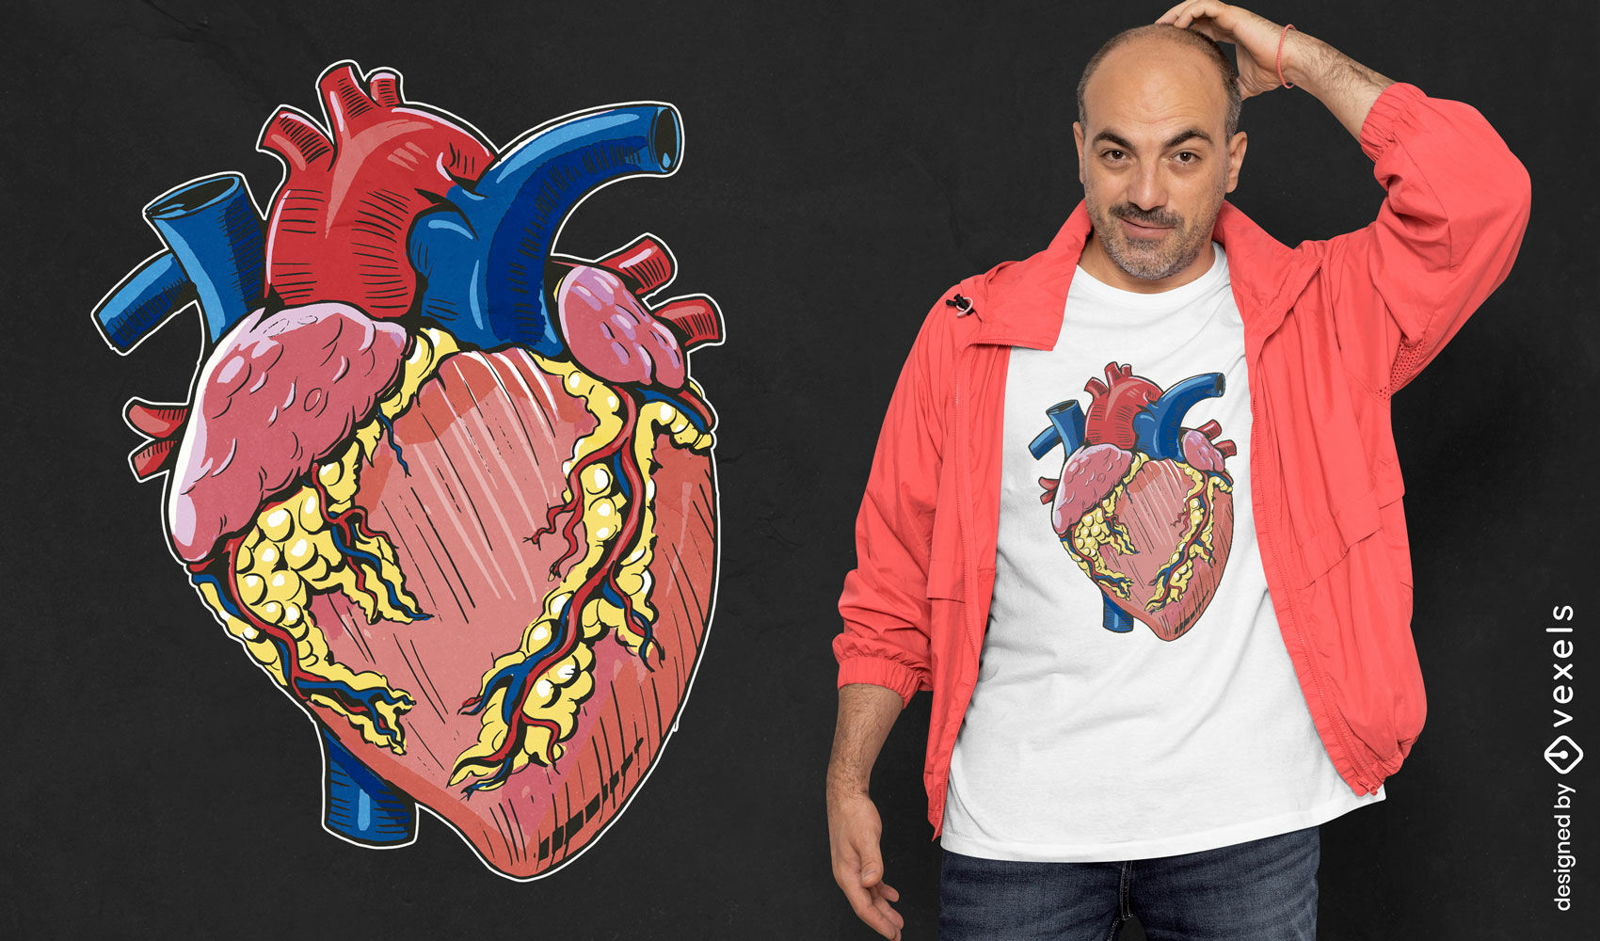 Anatomic heart t-shirt design